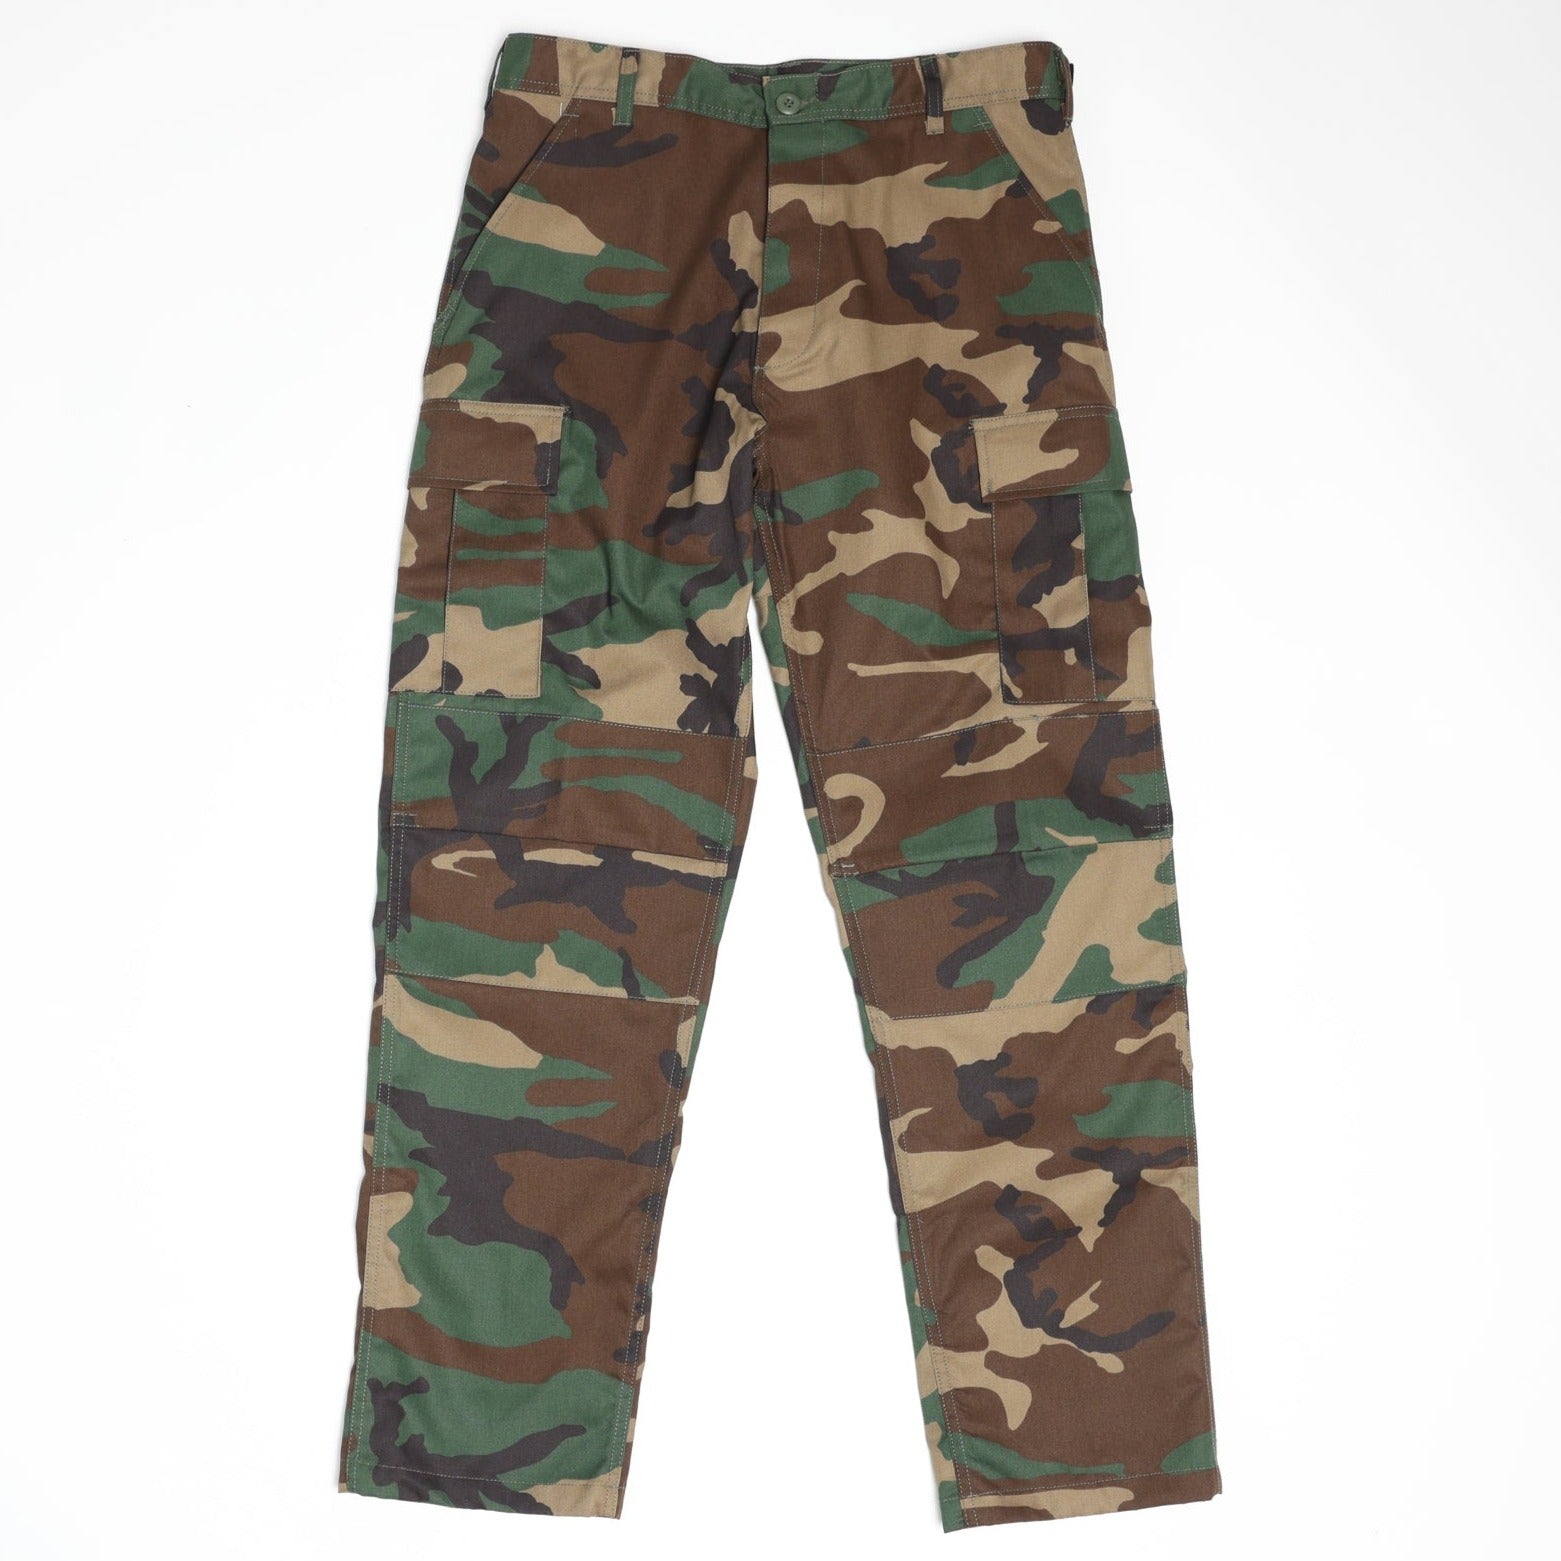 Desert Digital Camo - Military BDU Pants - Cotton Polyester Twill - Galaxy  Army Navy